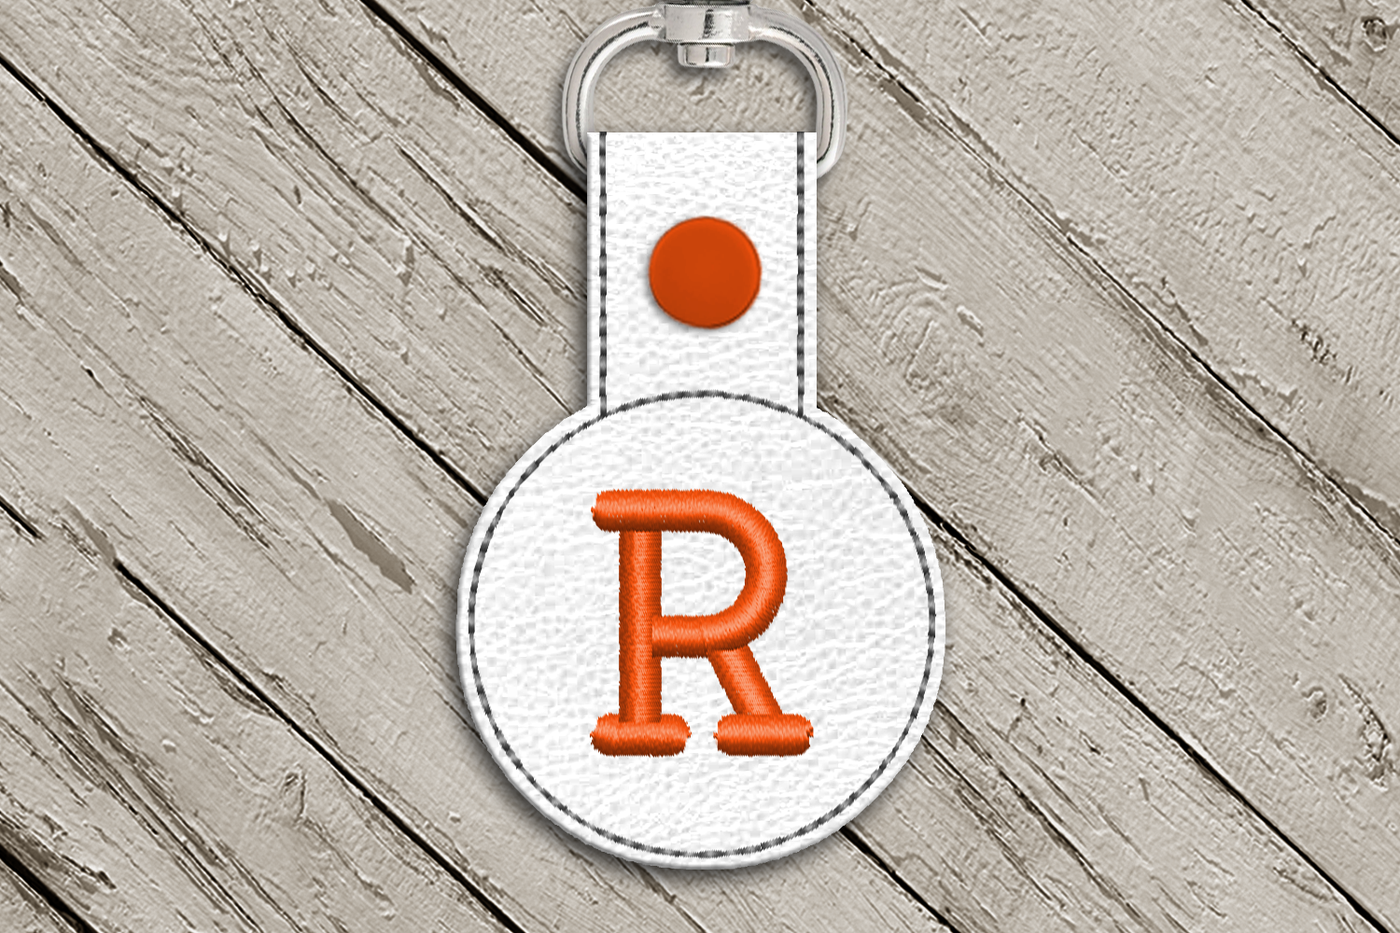 Letter R in the hoop key fob design